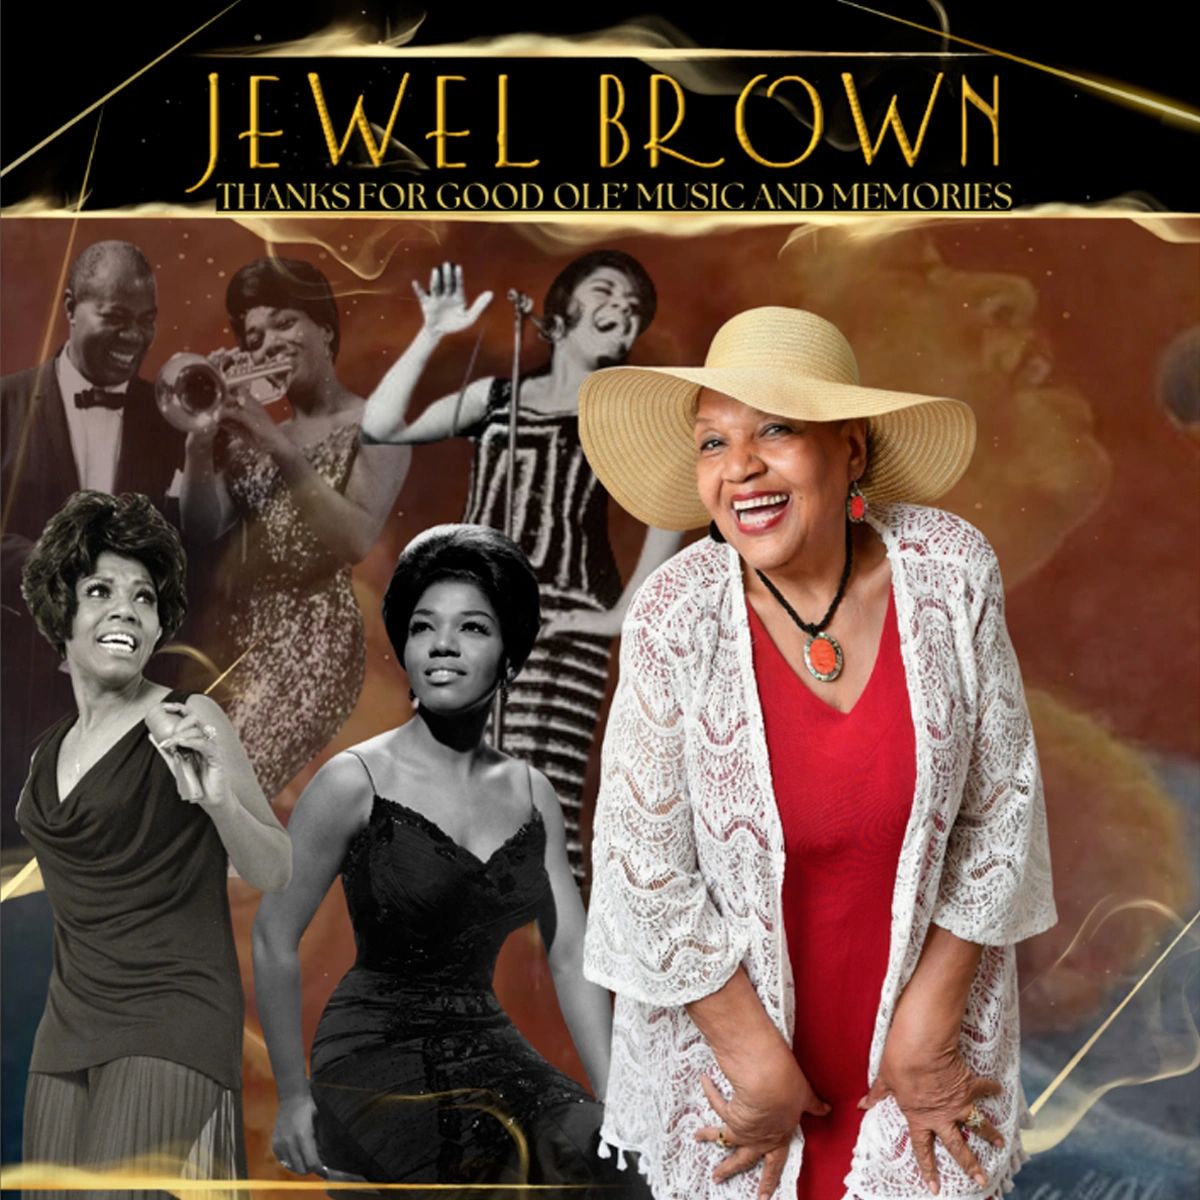 Texas Music Profile - Houston Blues Singer, Jewel Brown